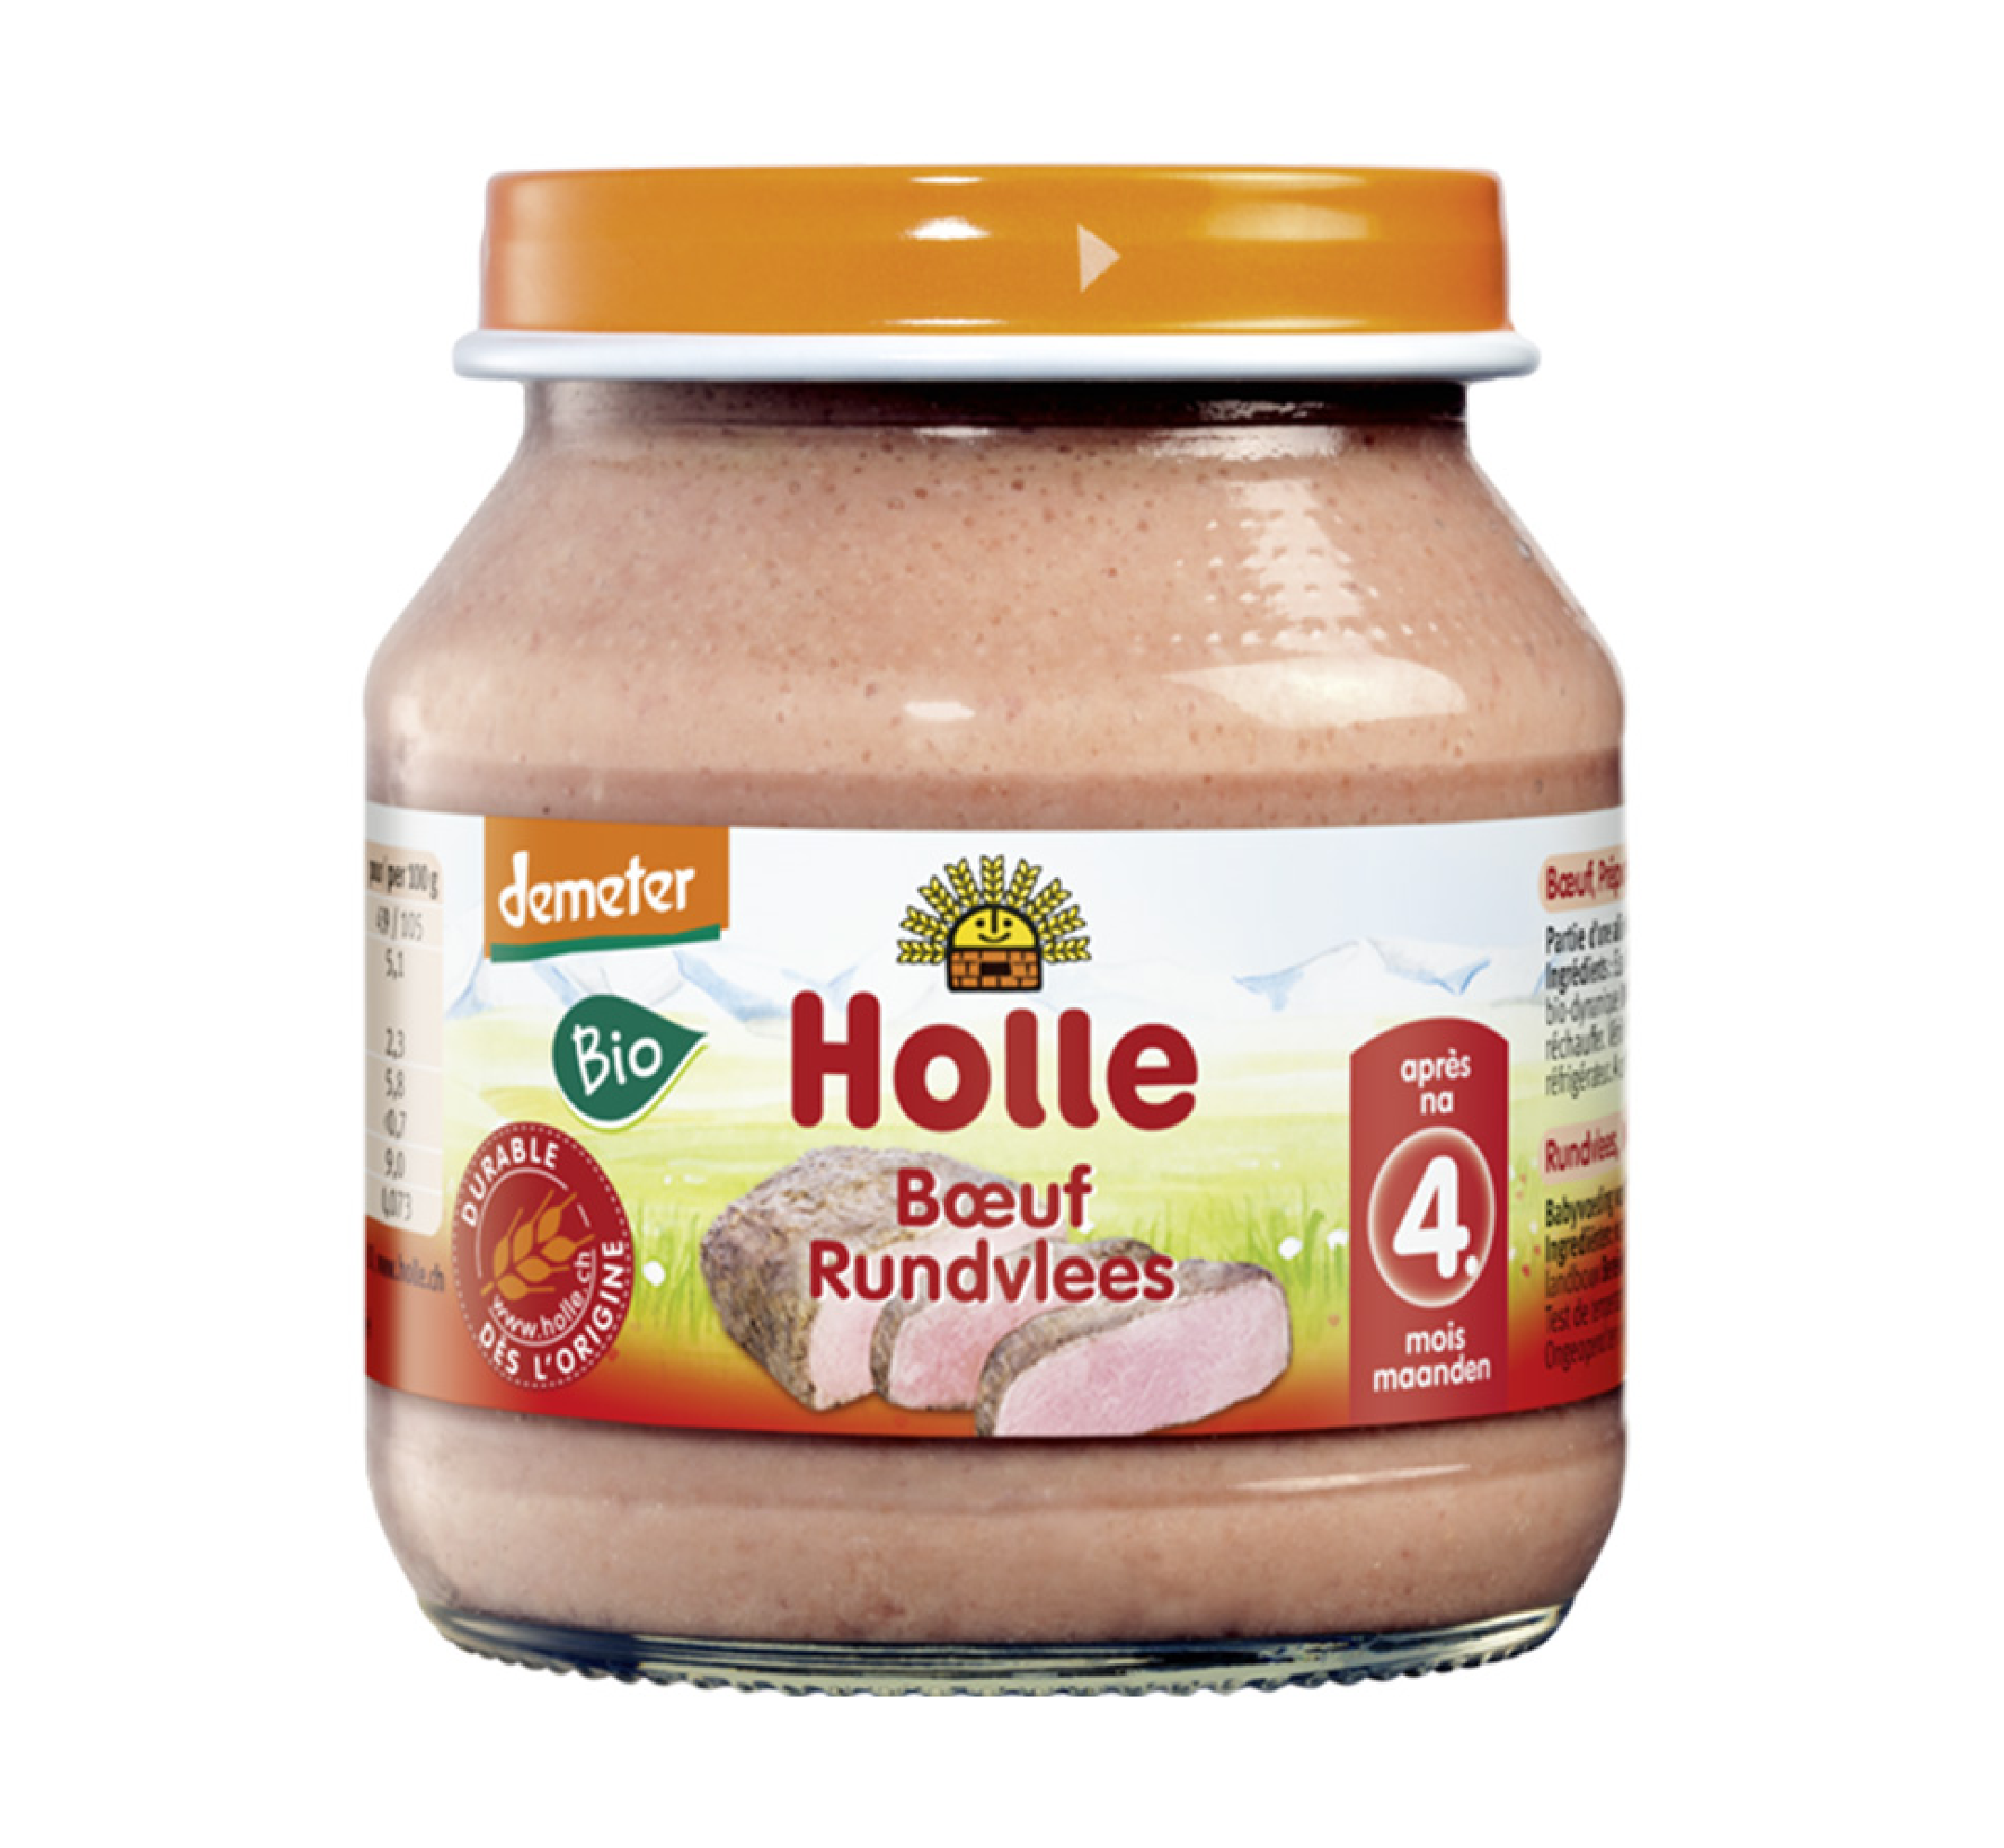 Holle – Pure me mish viçi (4m+)